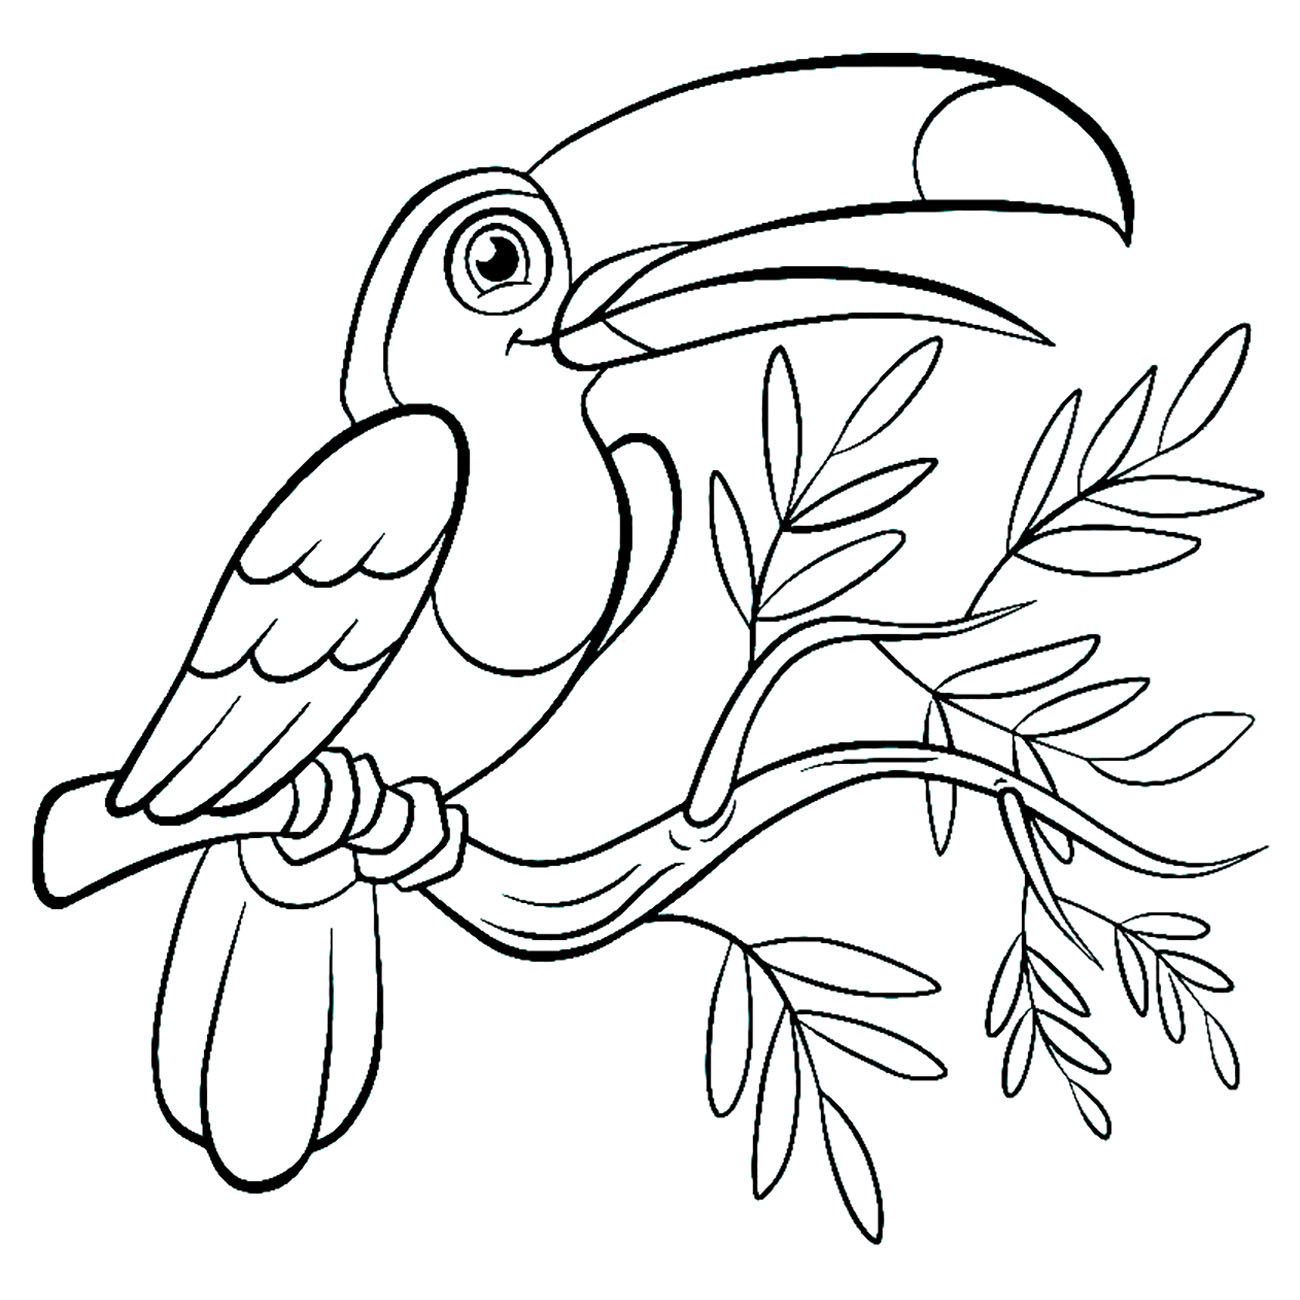 Un beau toucan sur sa branche feuillue